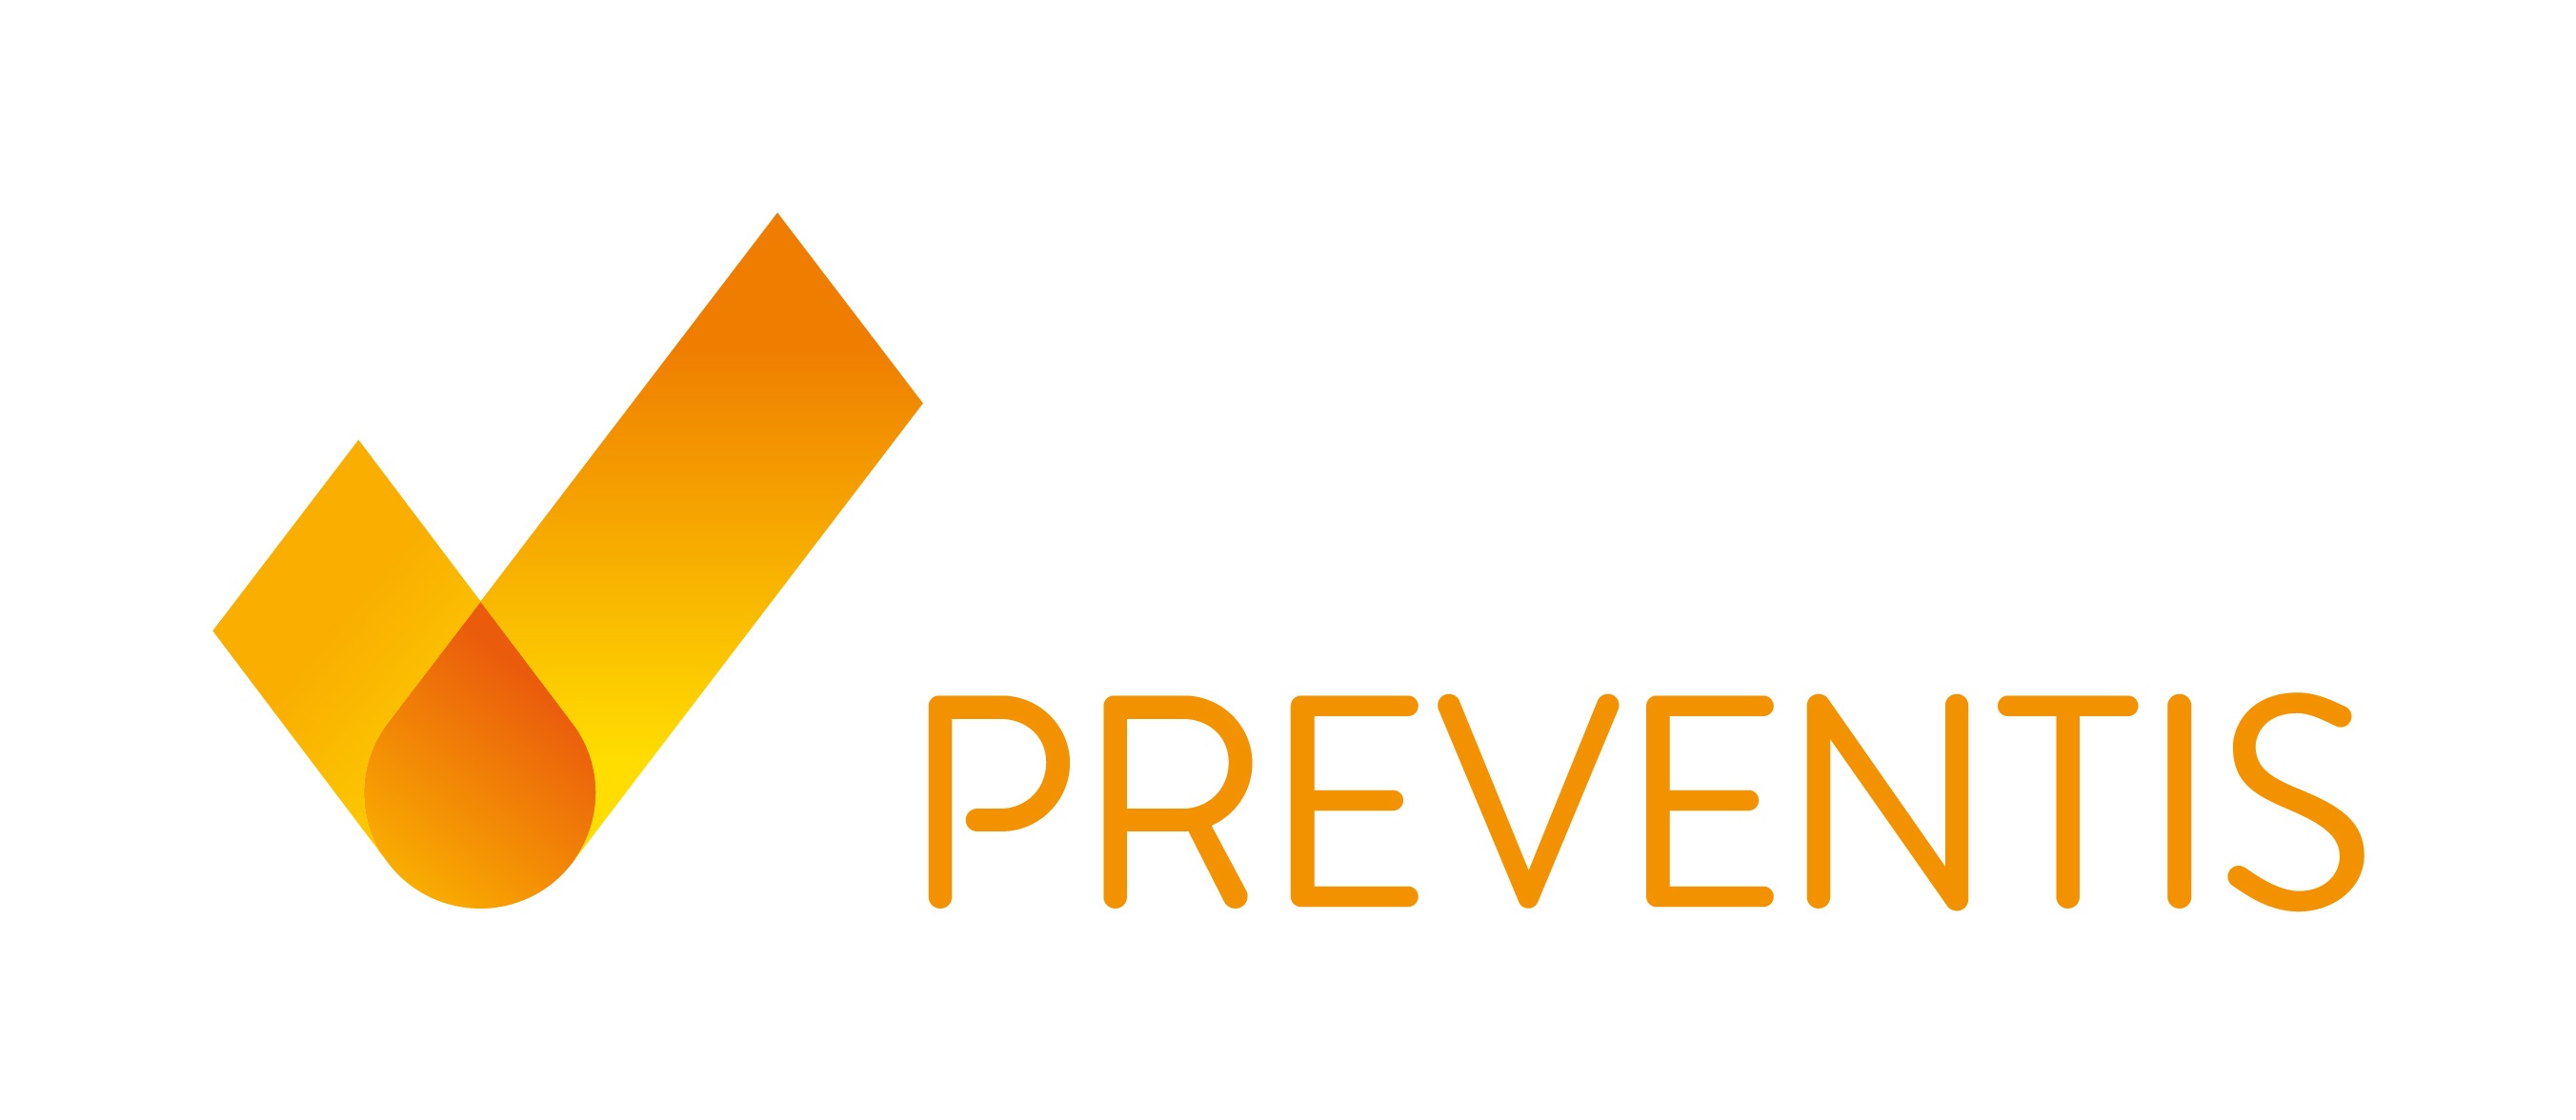 Preventis GmbH